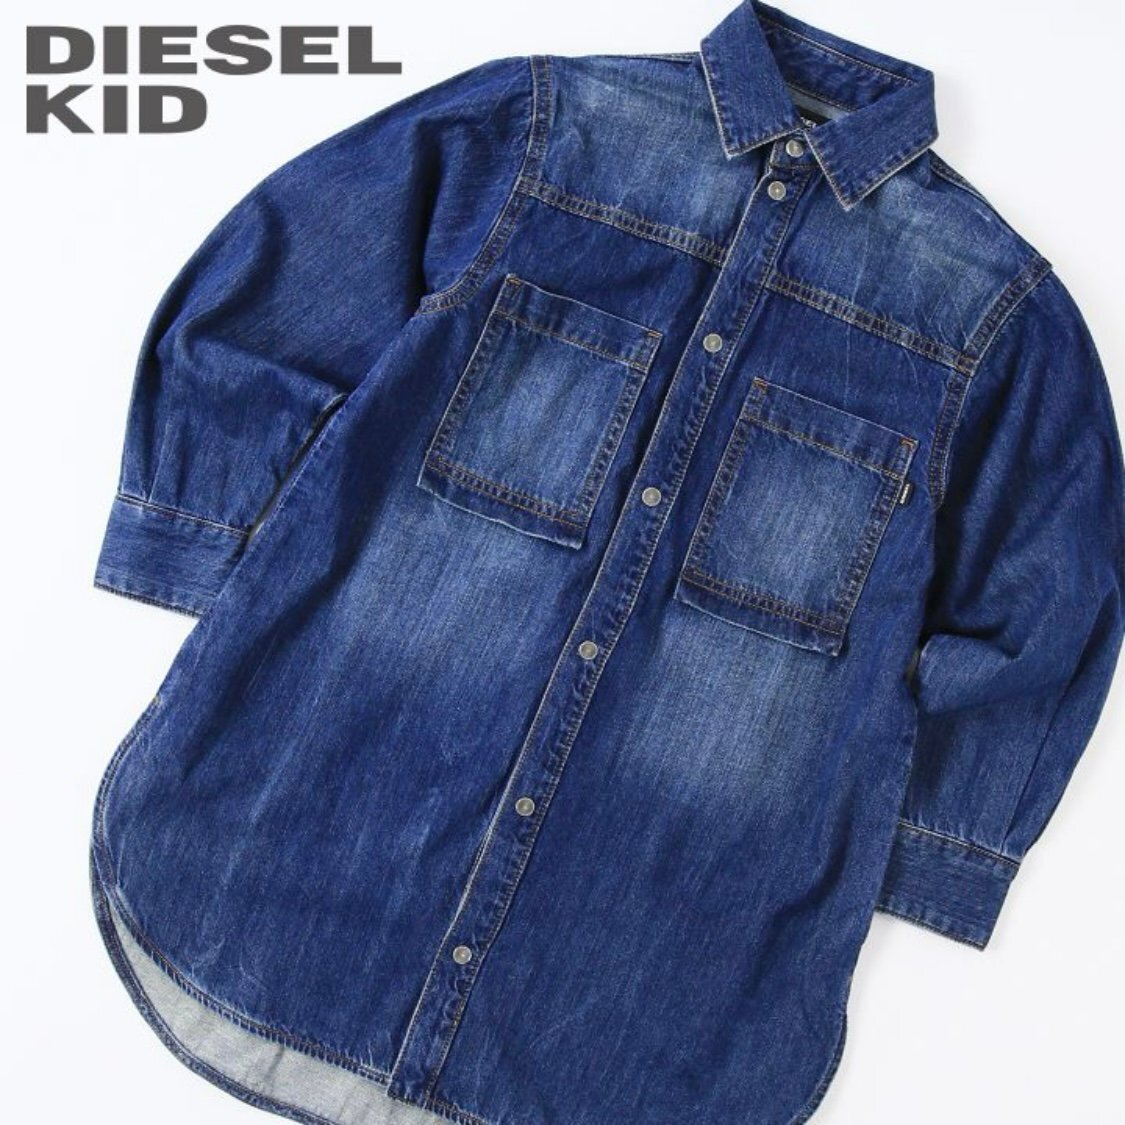  regular goods / new goods / unused /8Y size # with translation outlet # tag attaching / regular price 24,200 jpy #DIESEL diesel Kids girl Denim shirt One-piece 826